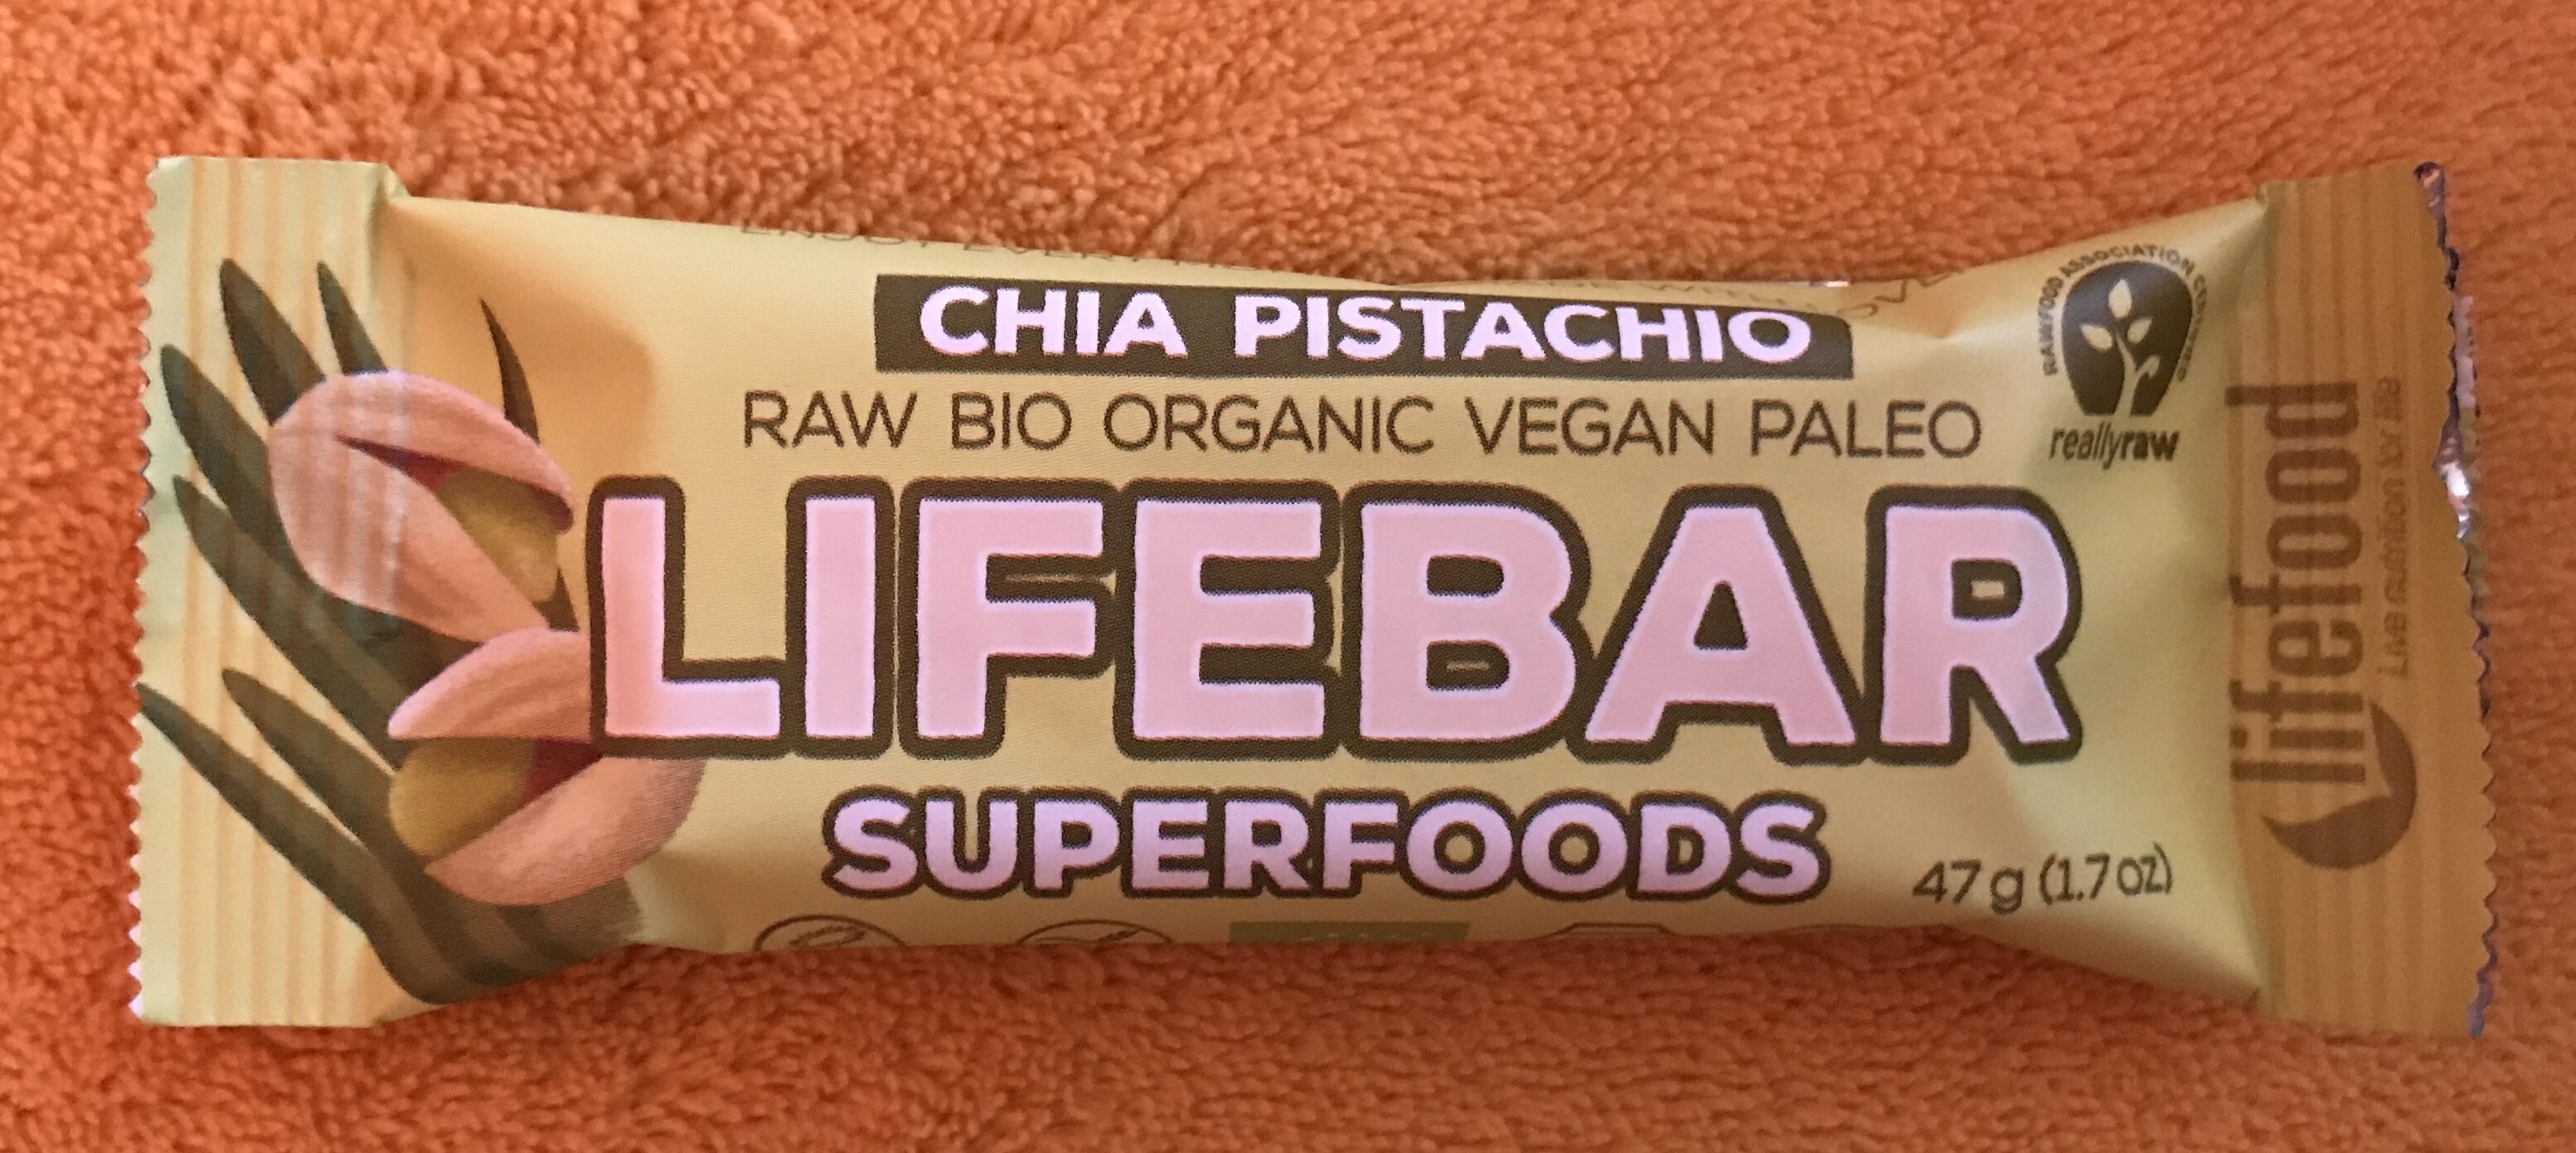 Lifebar chia pistachio - Product - cs